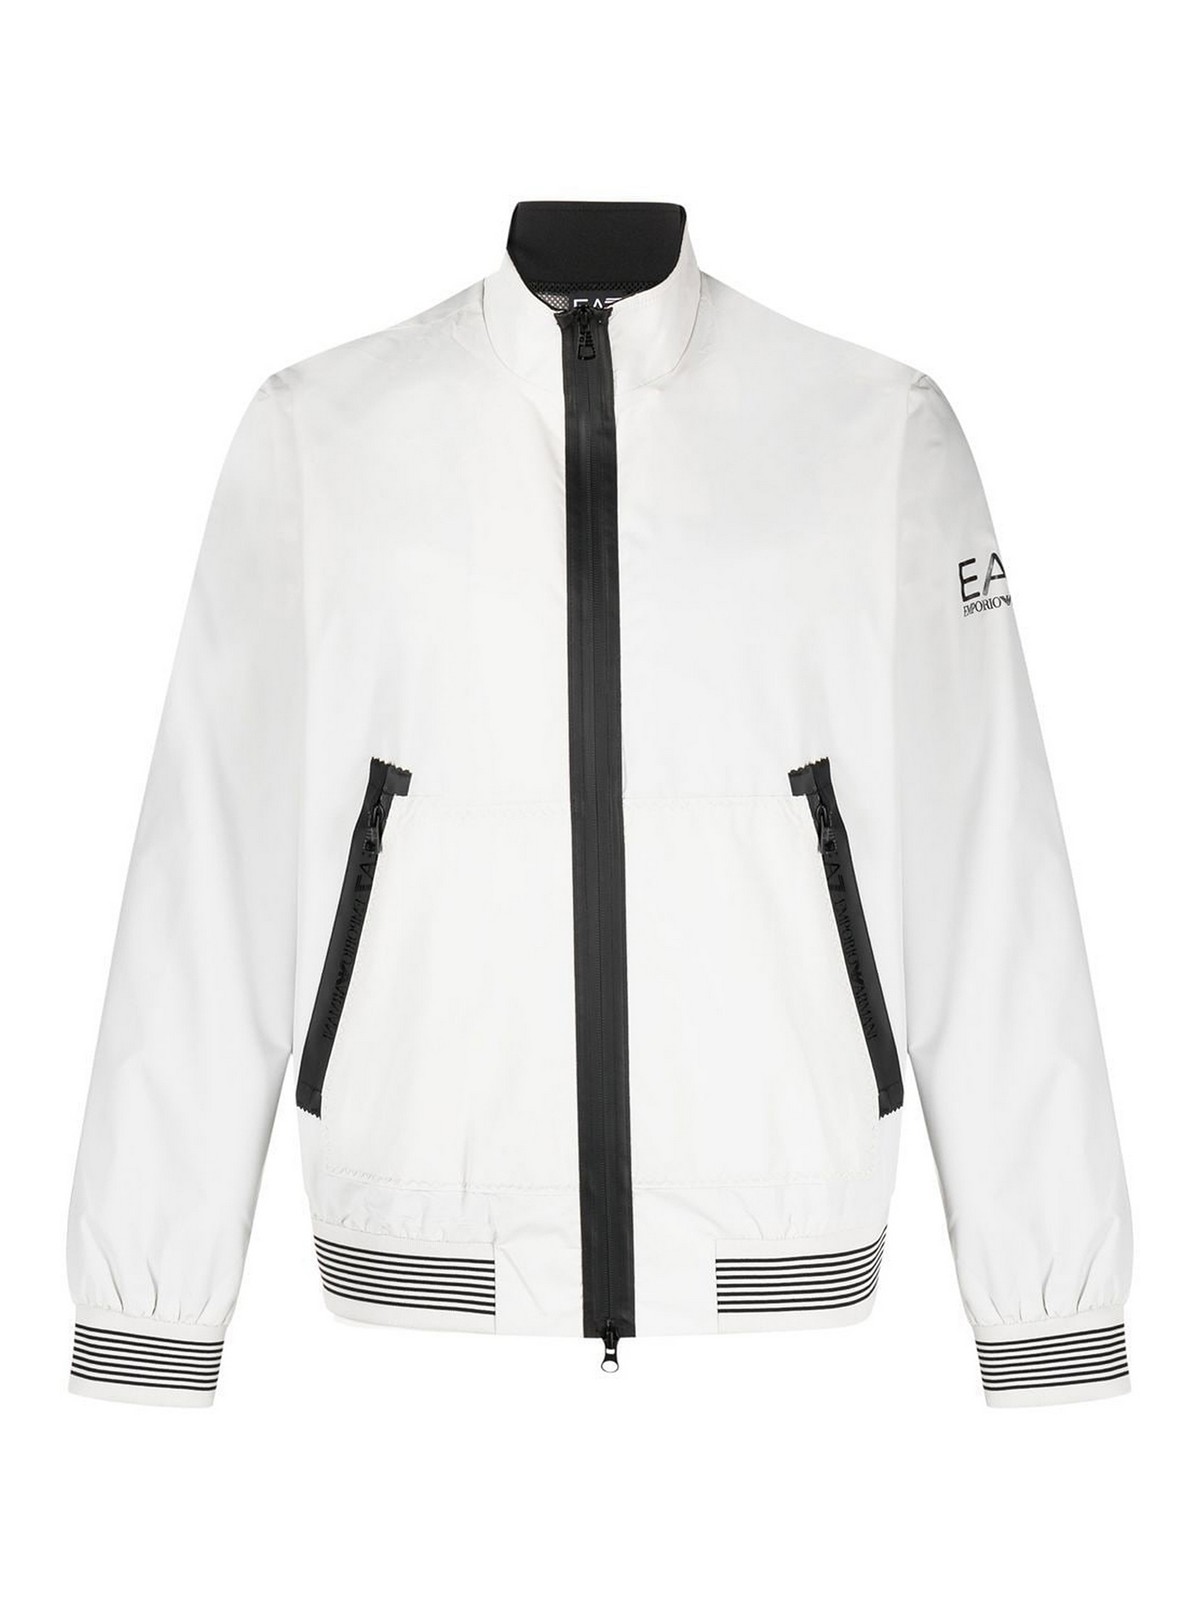 niemand Overvloed Weg huis Padded jackets EA7 Emporio Armani - Logo-print jacket with stripe details -  3RPB11PN27Z1941